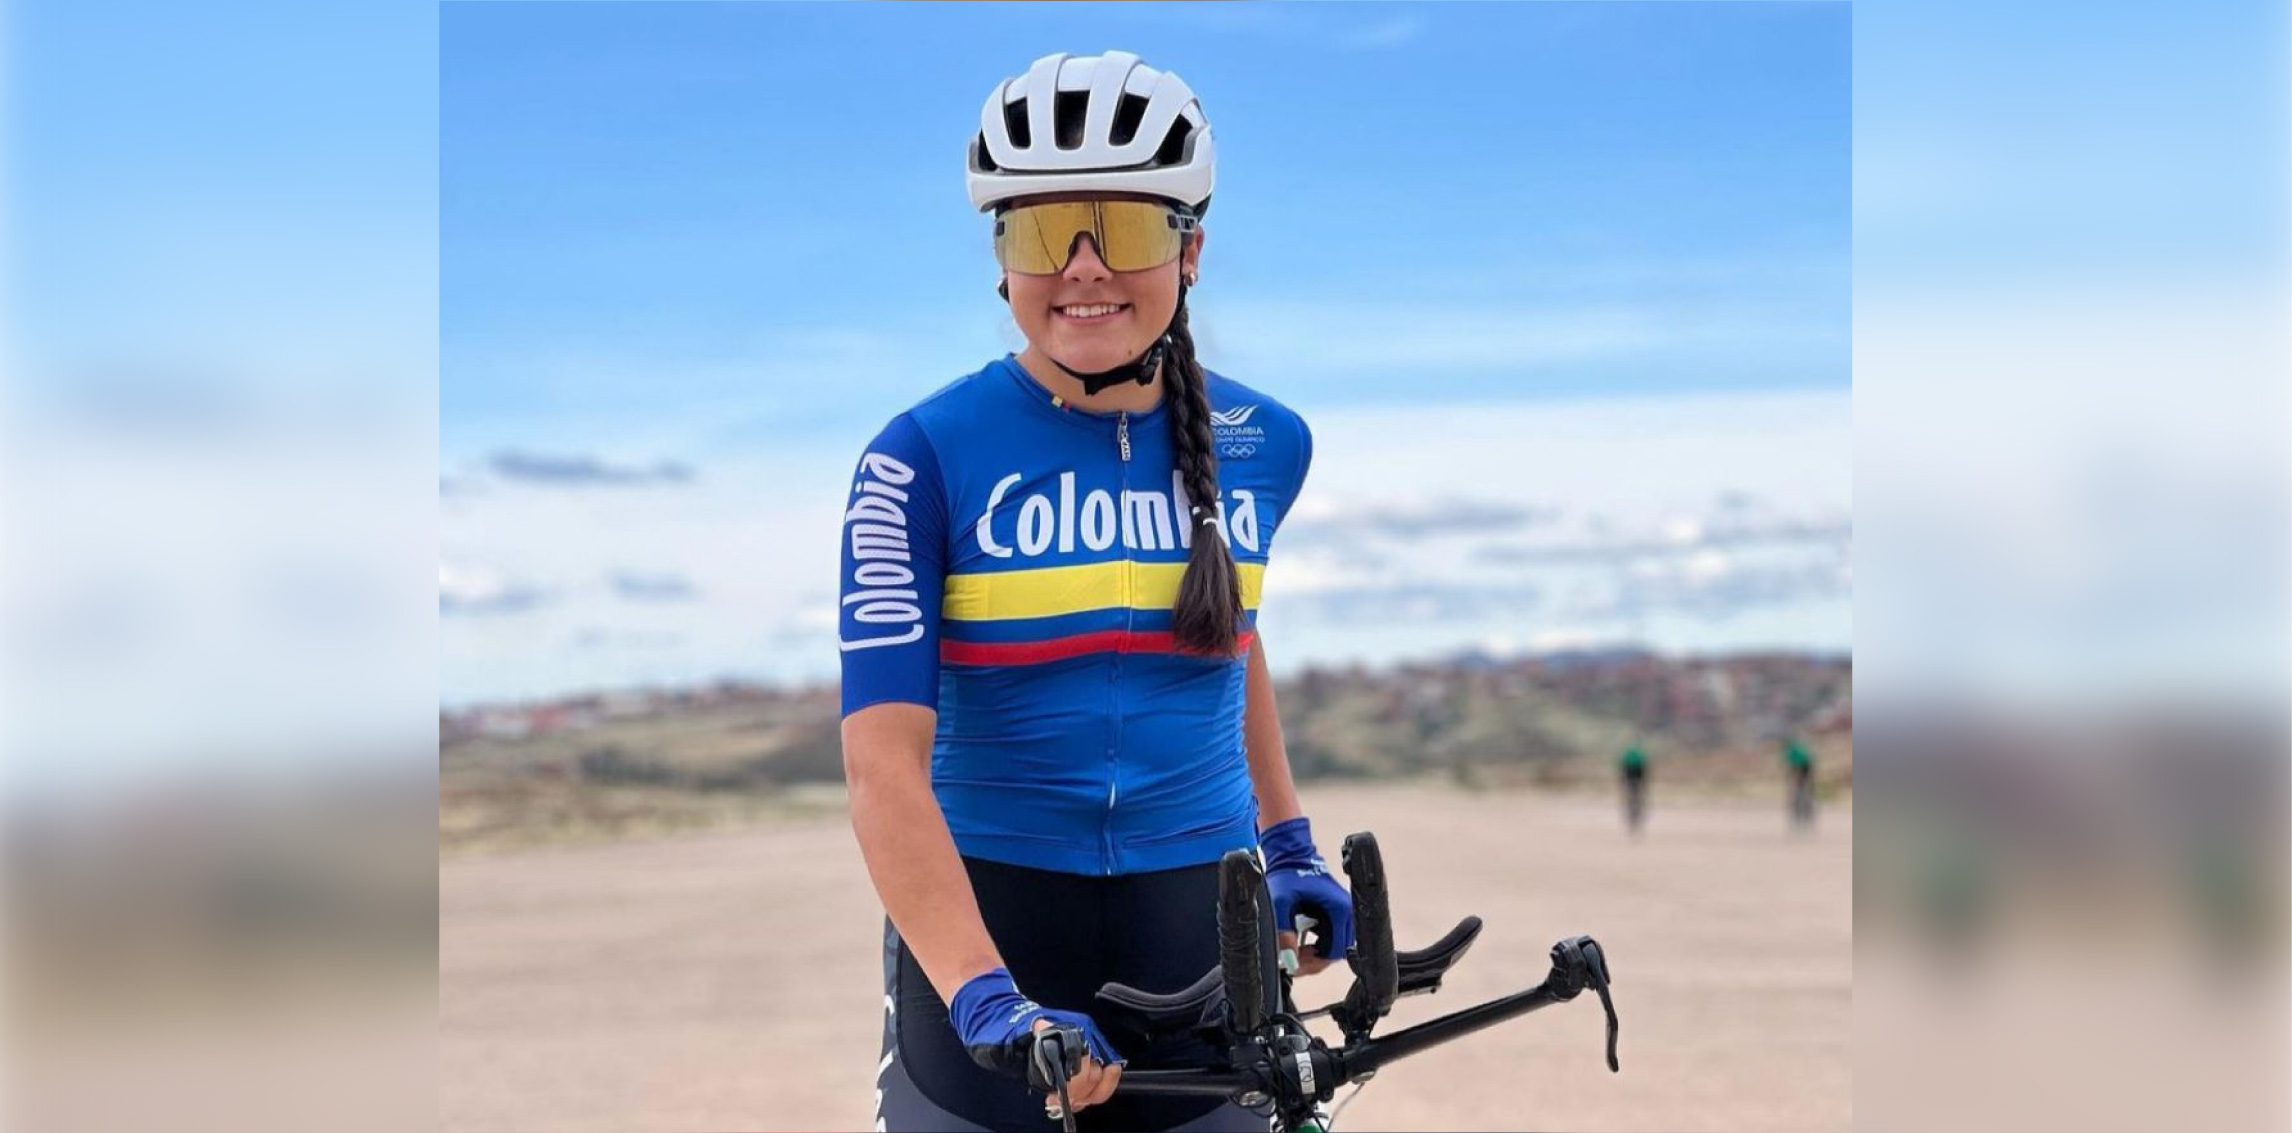 Ciclista de El Carmen se consagró campeona de la CRI en el Panamericano de Ruta en Brasil